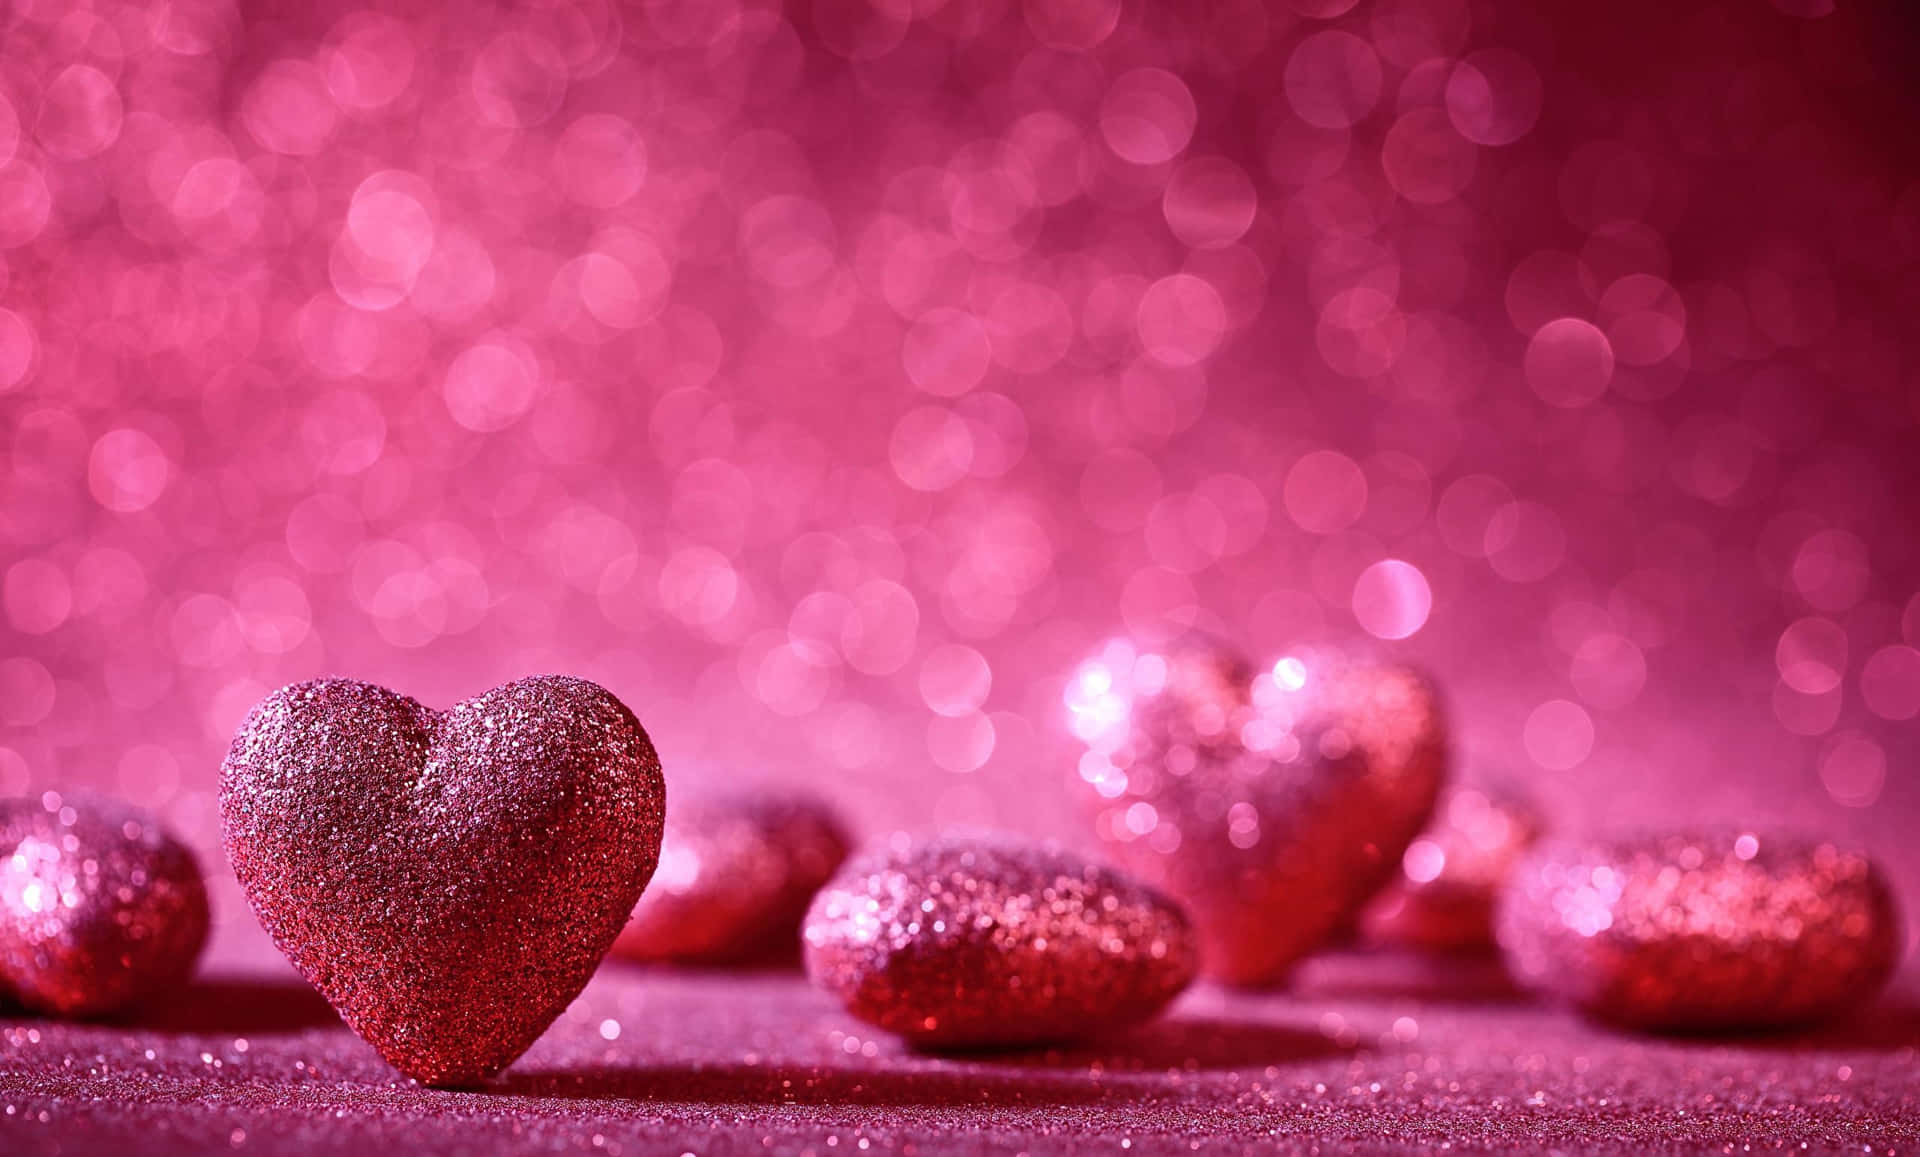 A beautiful display of glittery pink hearts Wallpaper